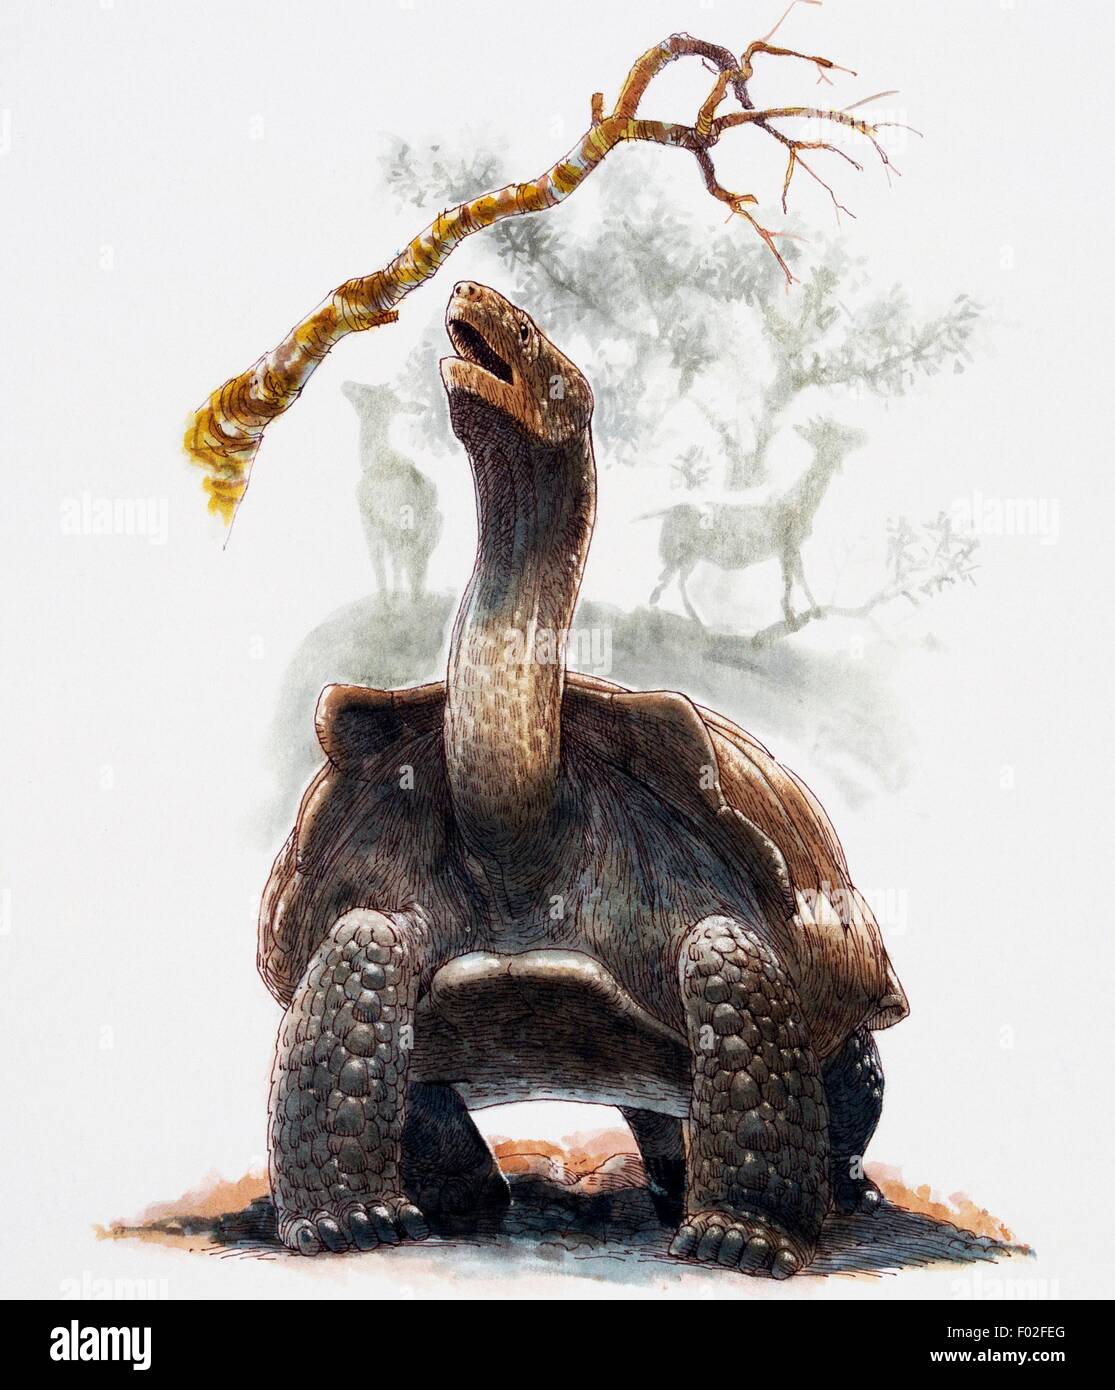 Giant tortoise. Artwork by James Robins. Stock Photo